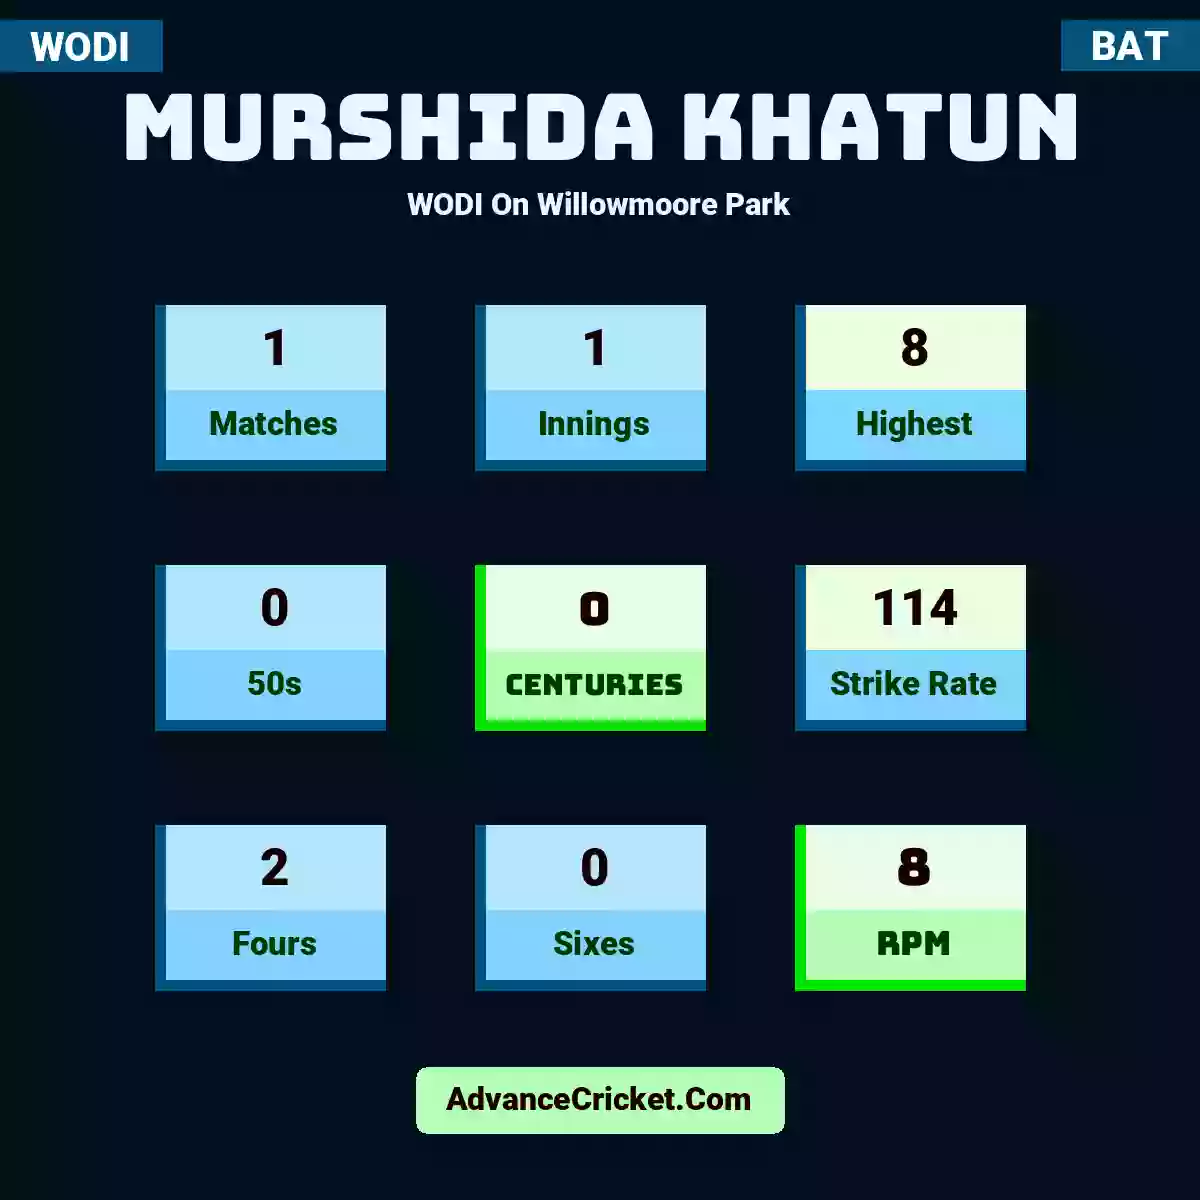 Murshida Khatun WODI  On Willowmoore Park, Murshida Khatun played 1 matches, scored 8 runs as highest, 0 half-centuries, and 0 centuries, with a strike rate of 114. M.Khatun hit 2 fours and 0 sixes, with an RPM of 8.